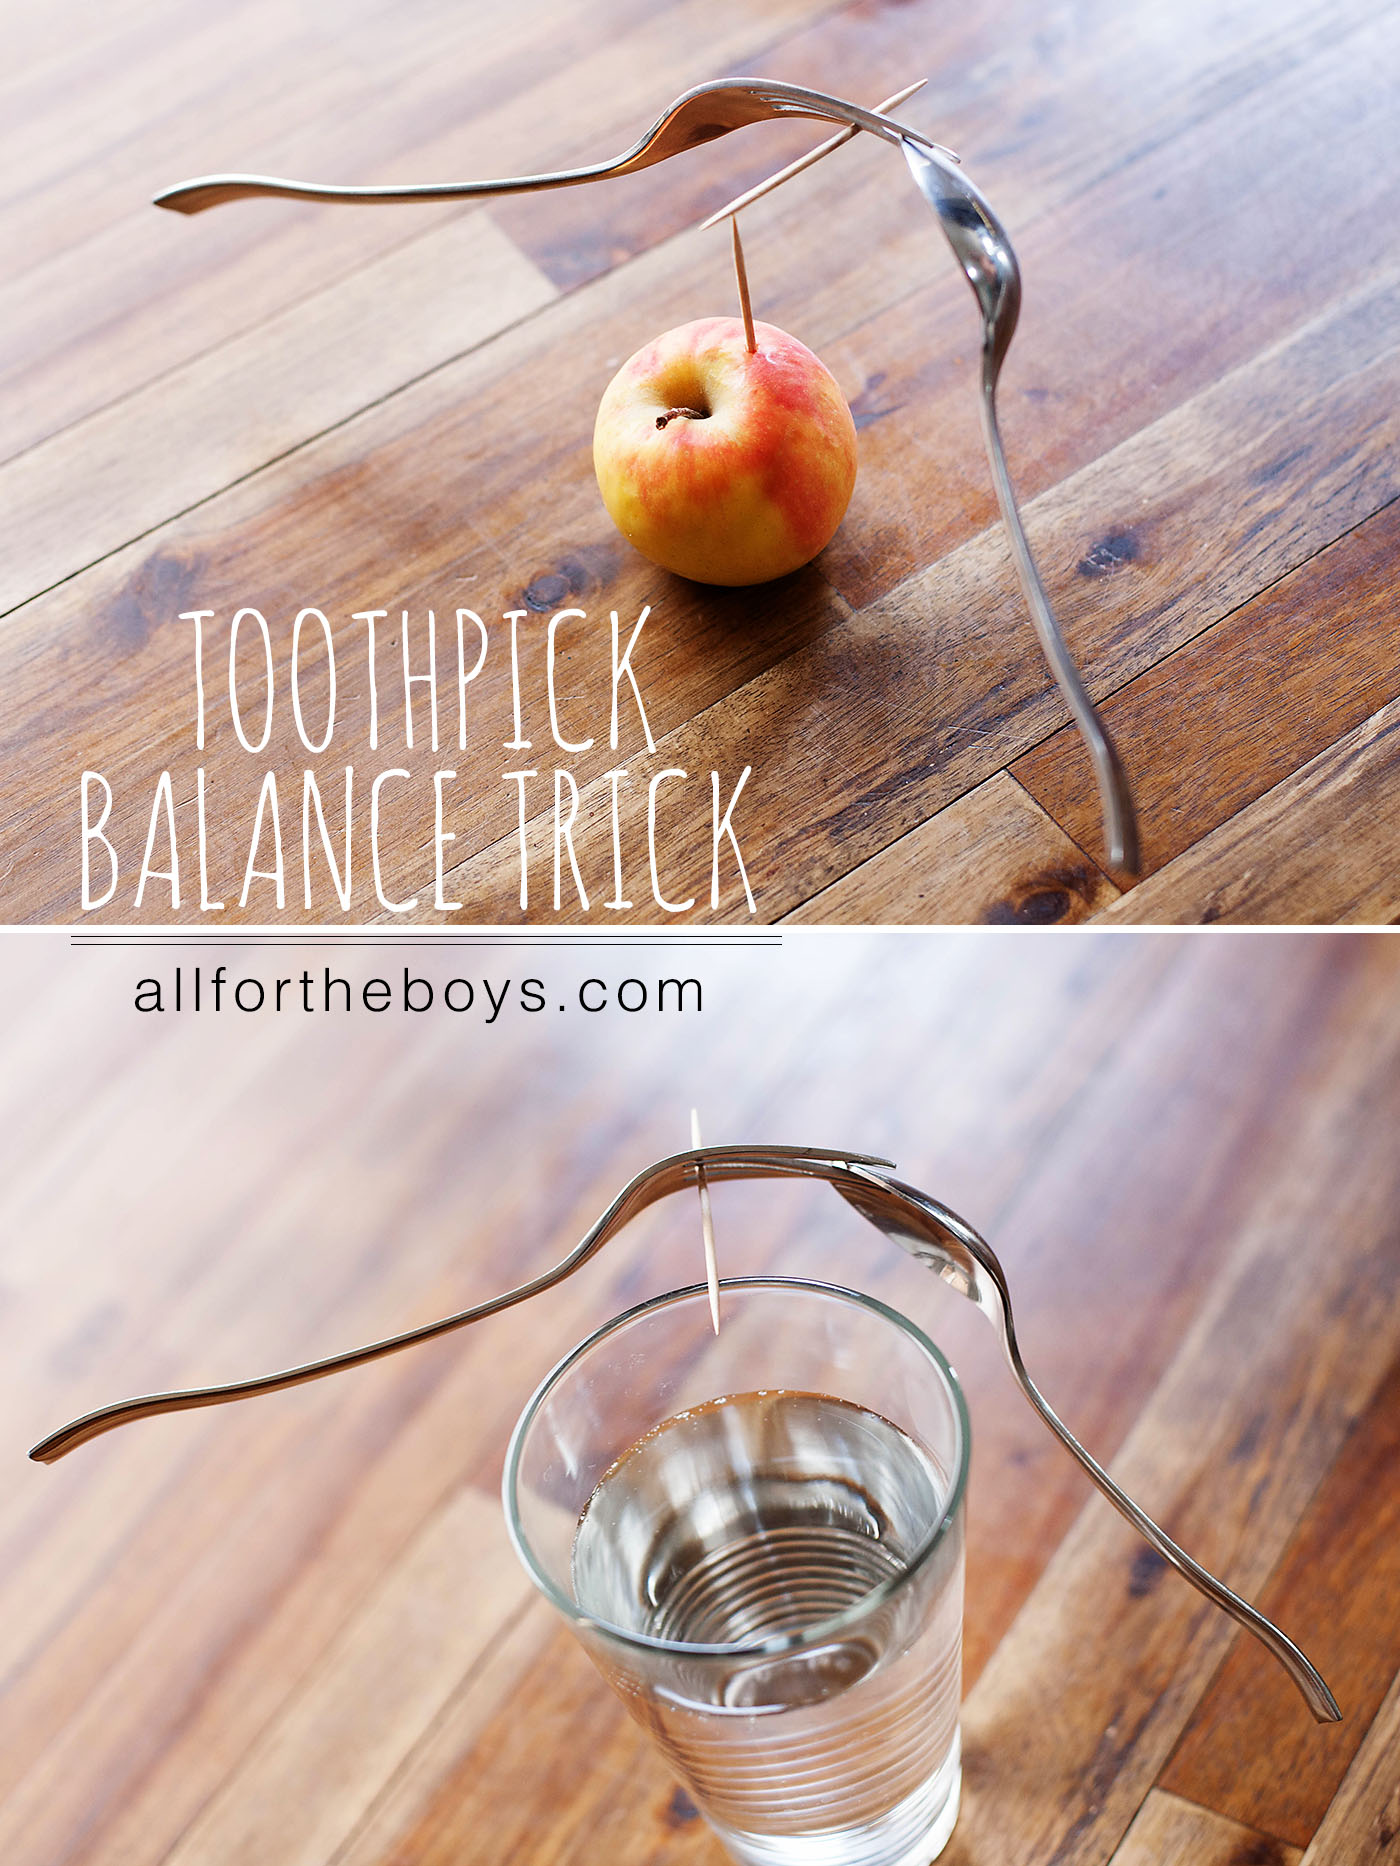 Toothpick balance trick